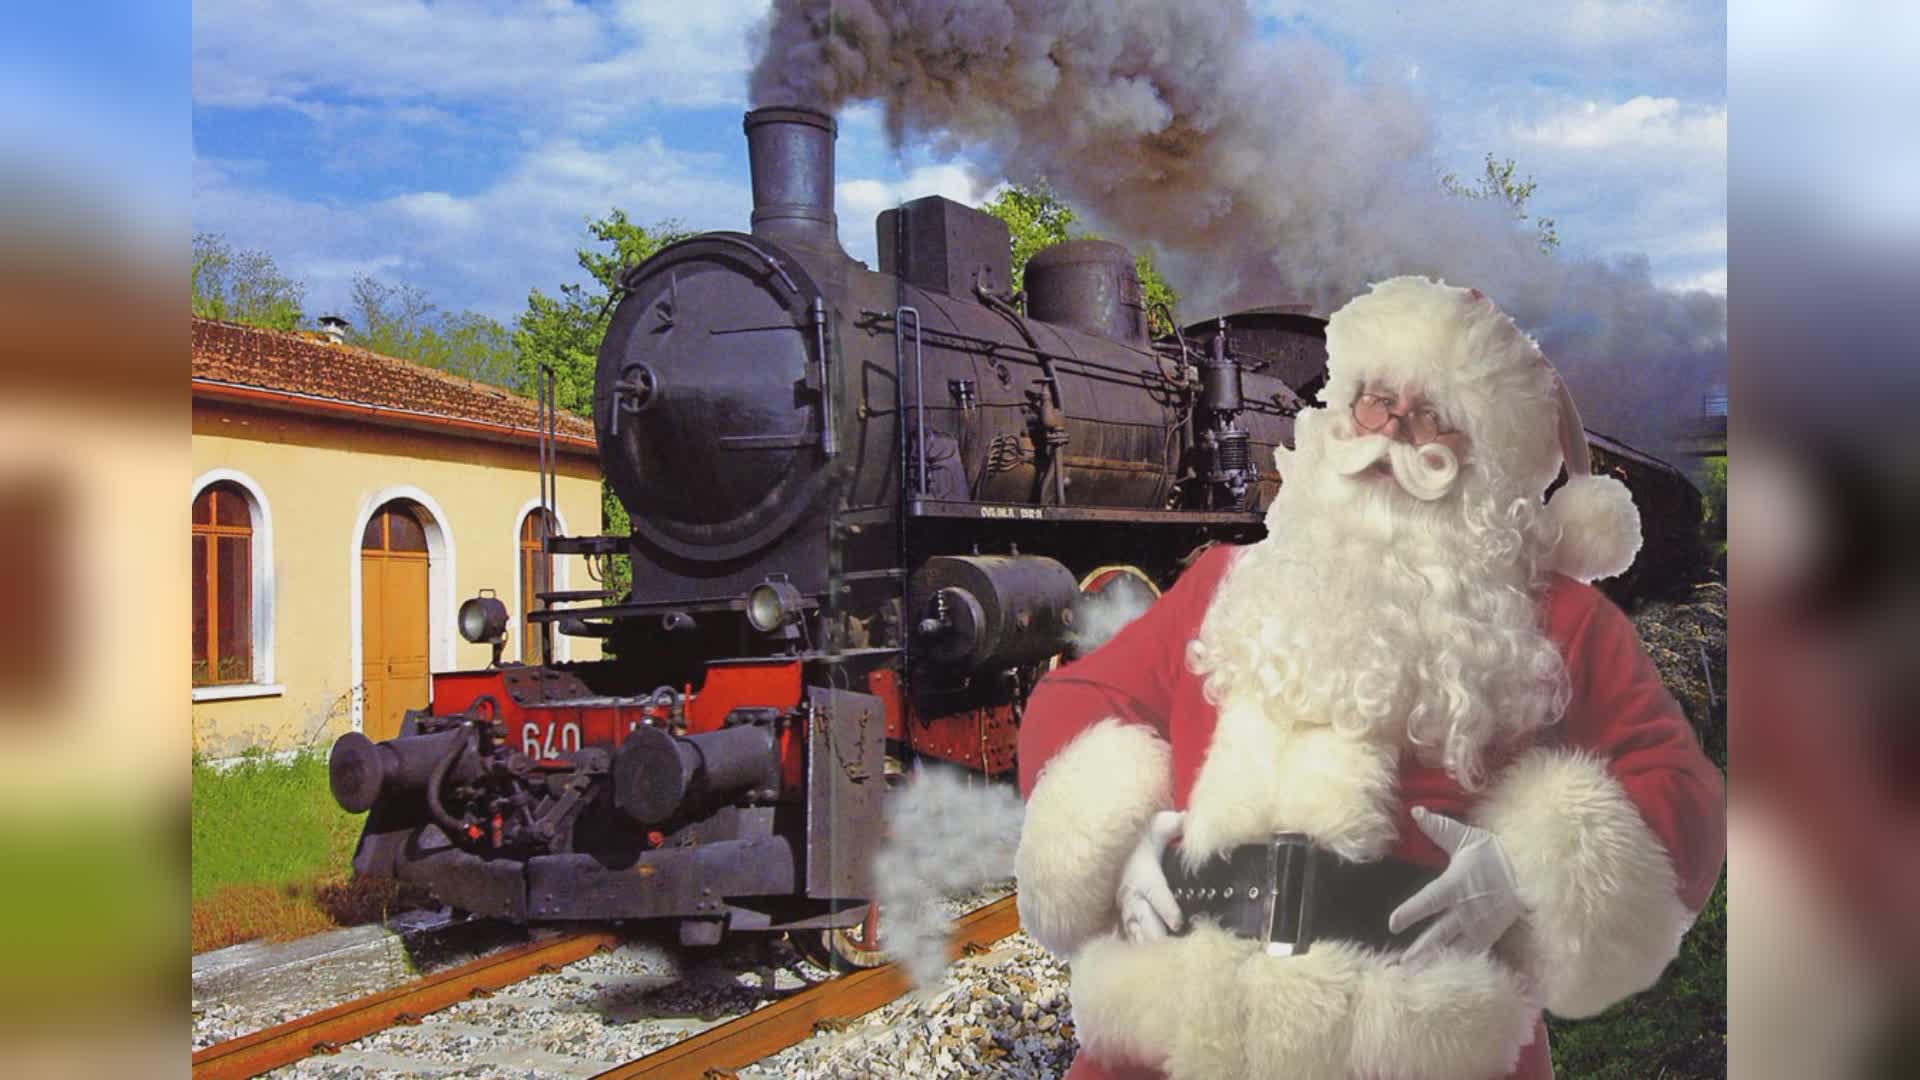 Babbo Natale in treno per ricevere doni per bimbi bisognosi